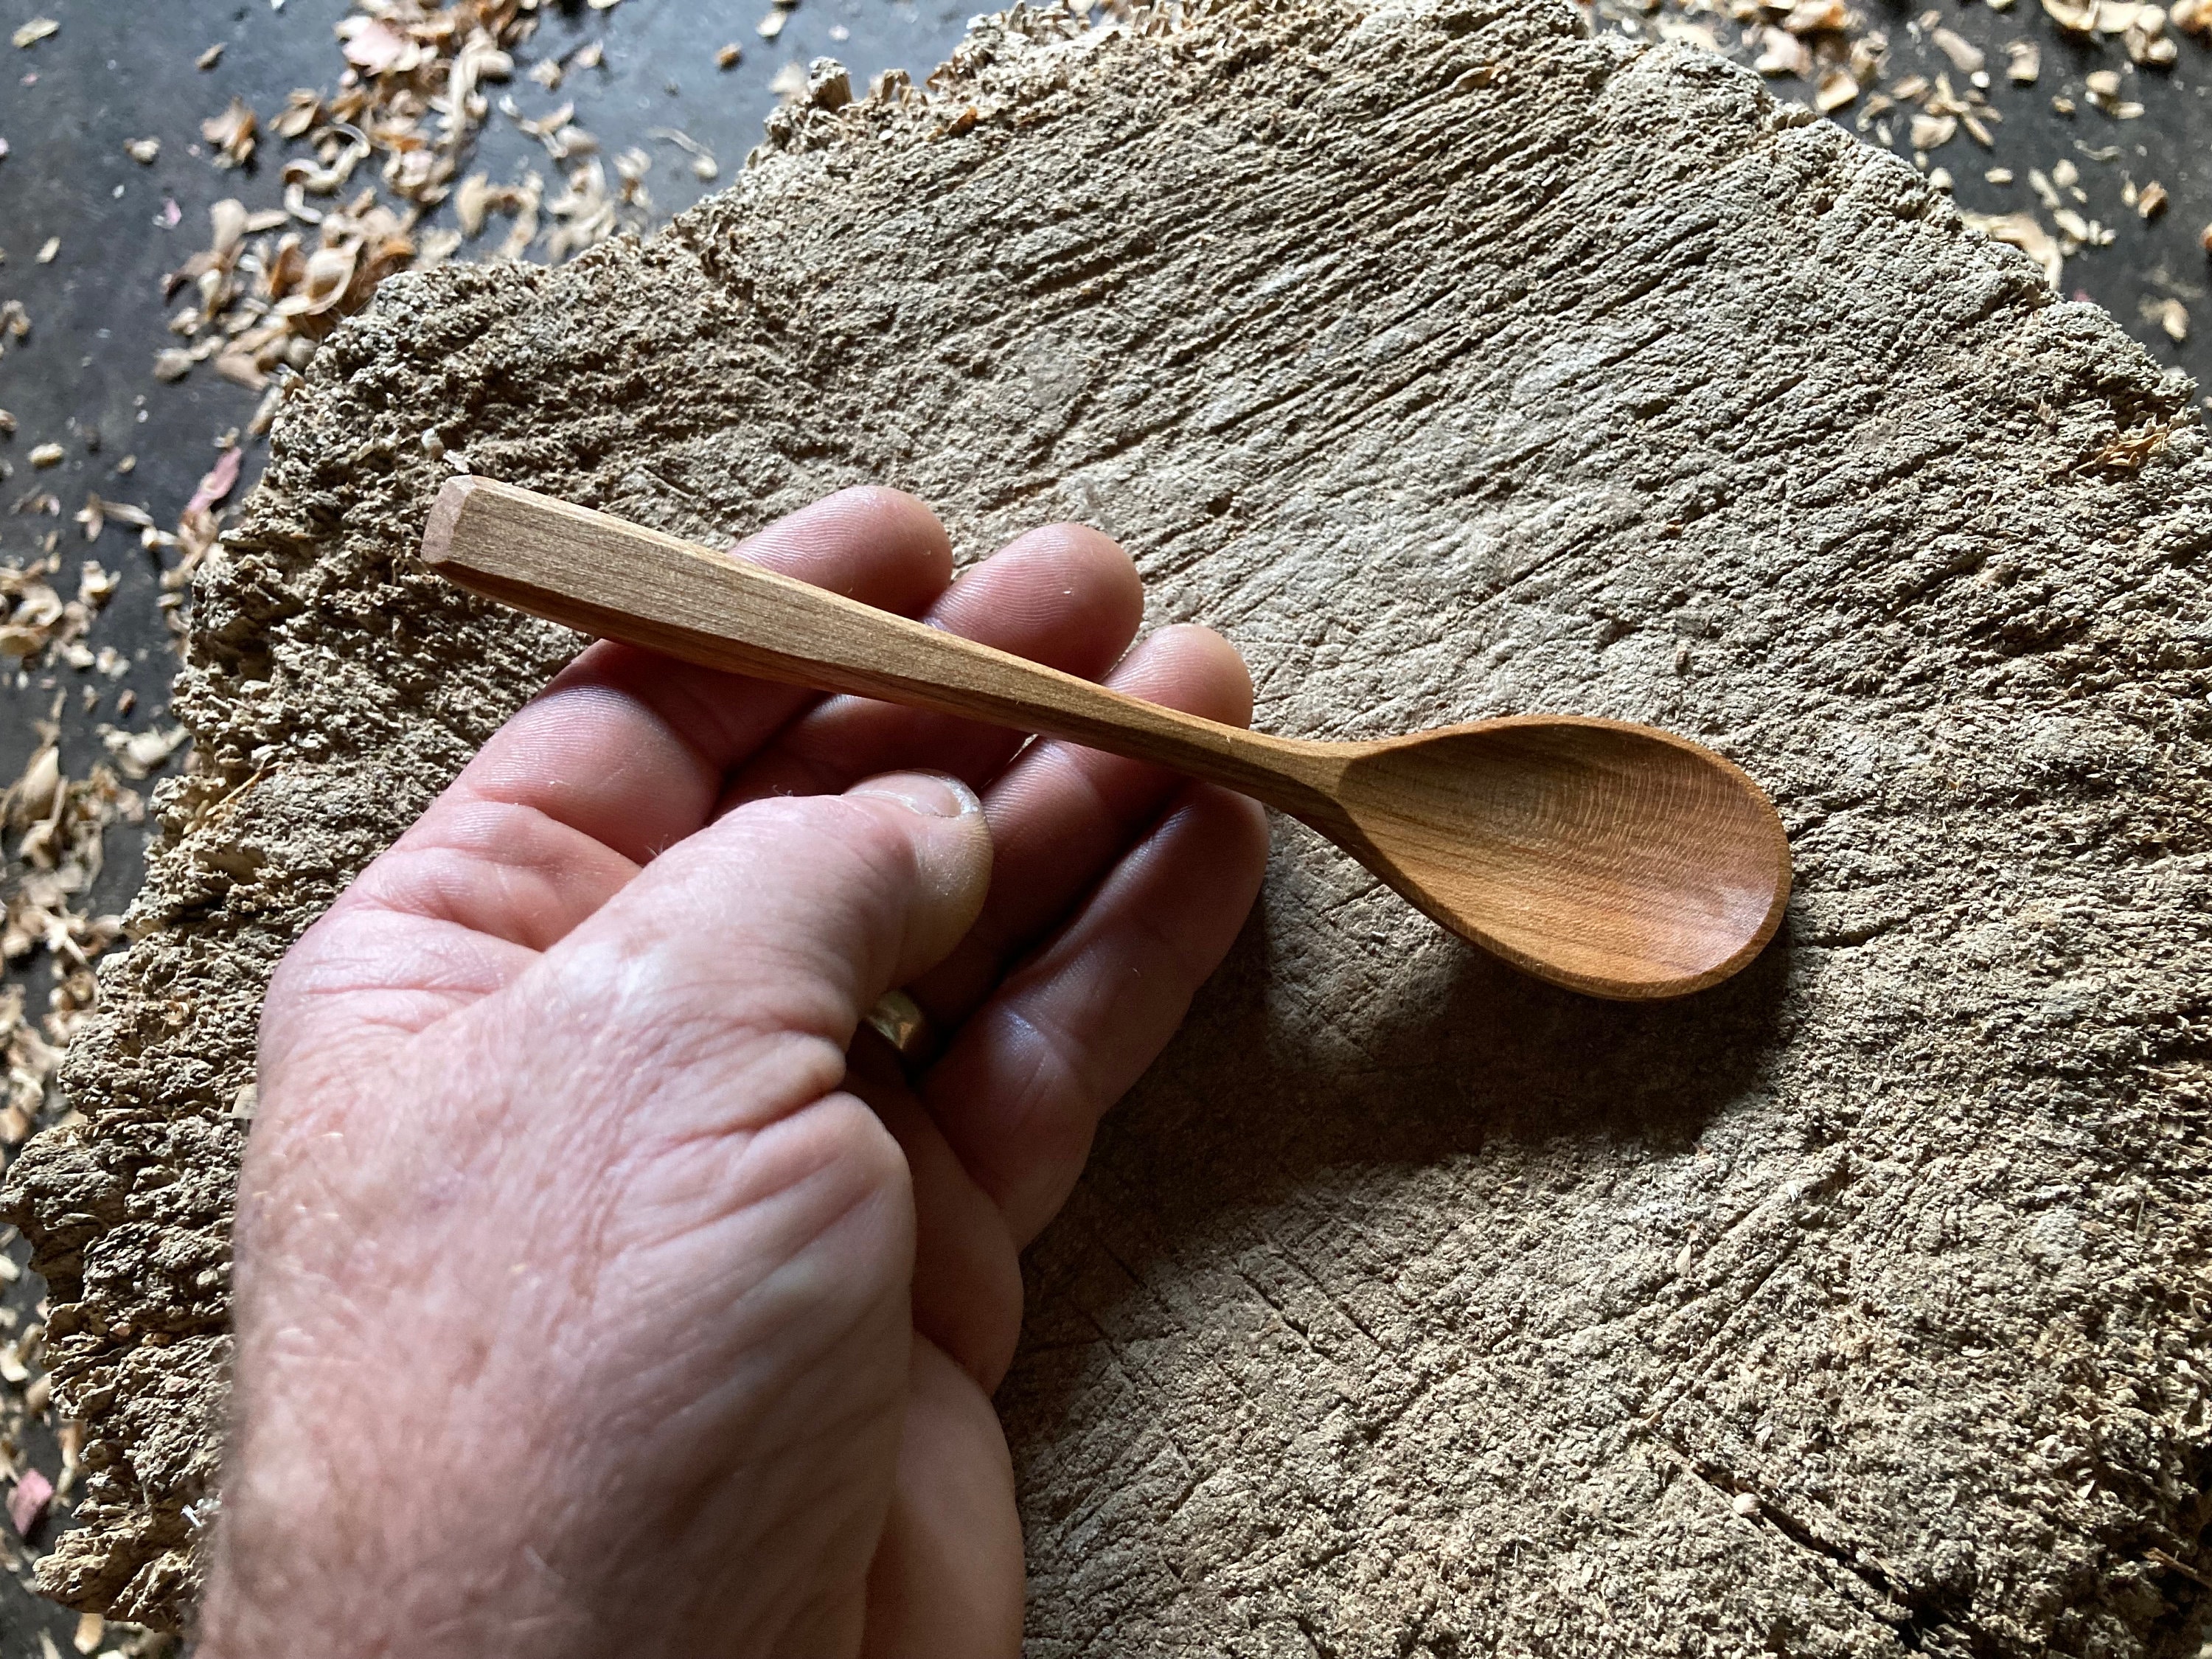 Wood Baby Spoon, 6 in Handmade Wooden Baby Spoon, Hardwood and Heirloom, A Keeps